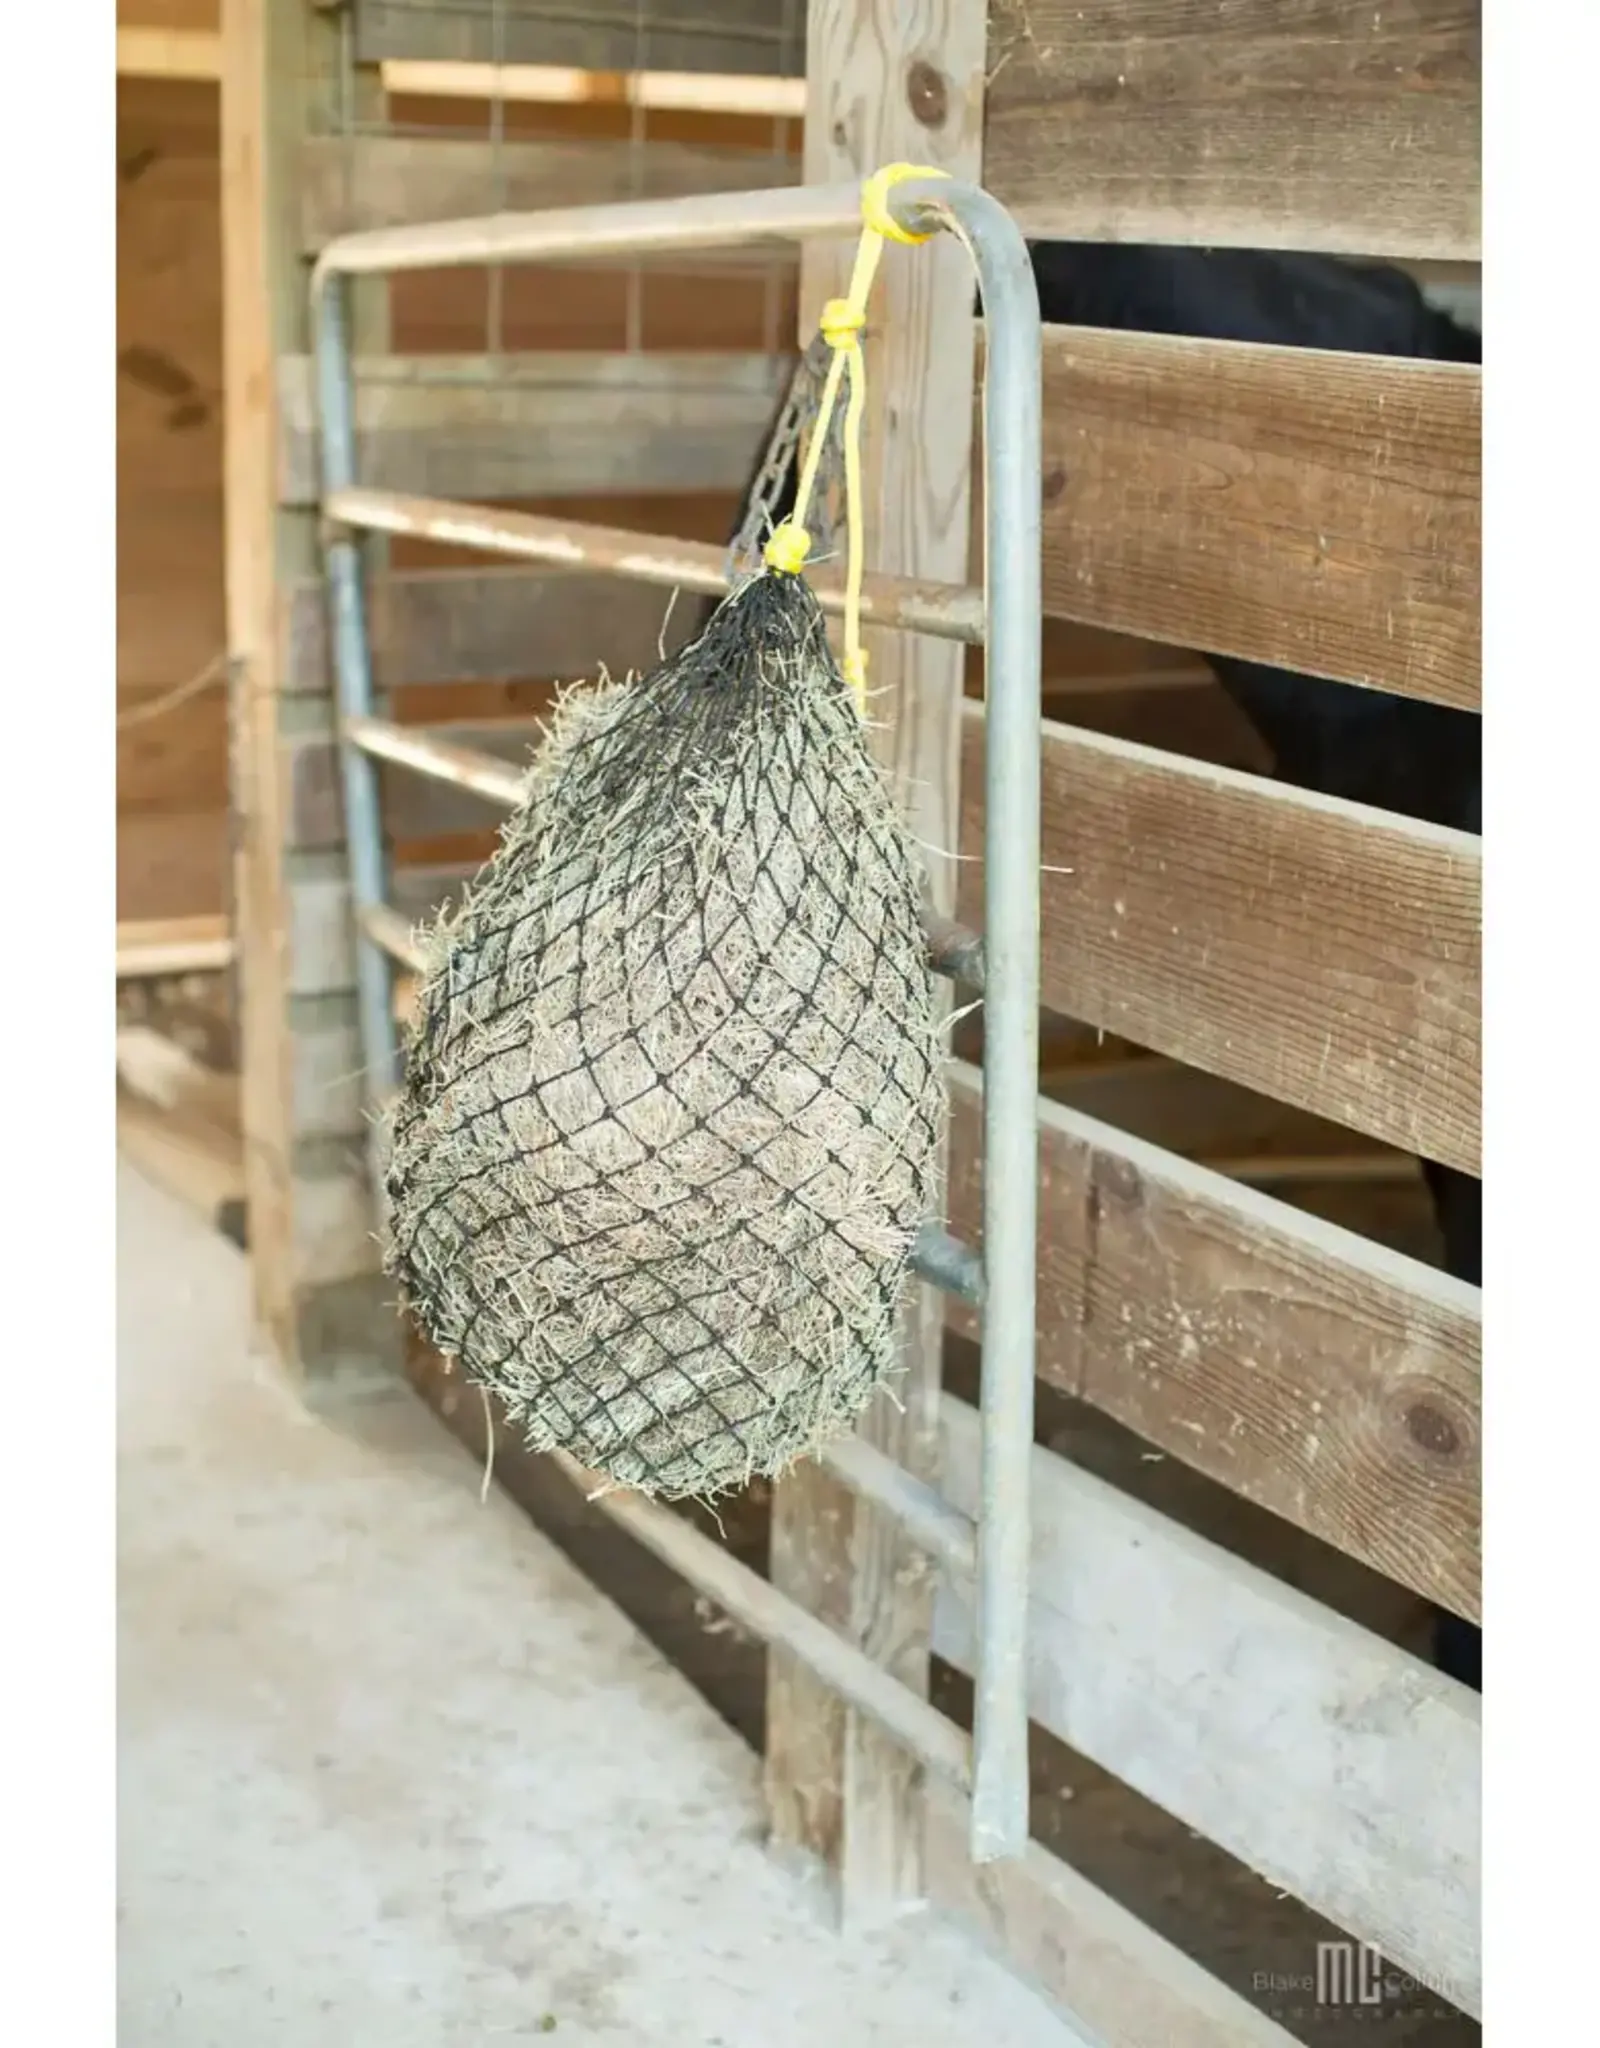 Texas Haynet Small Hay Net